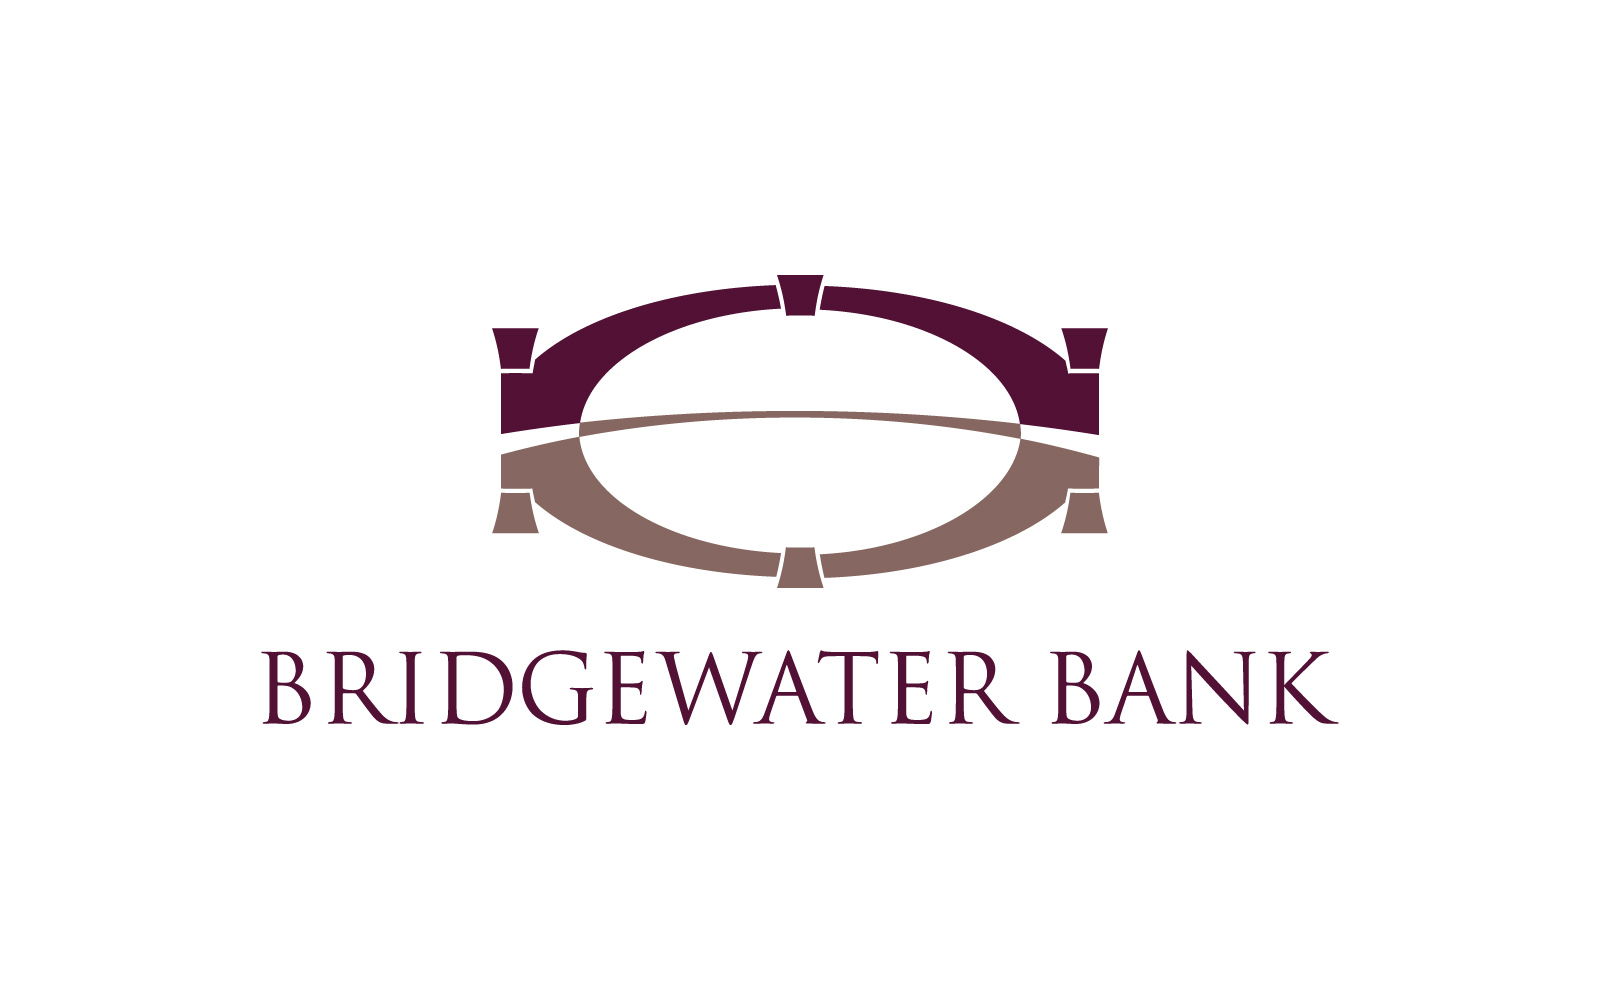 Bridgewater Bank